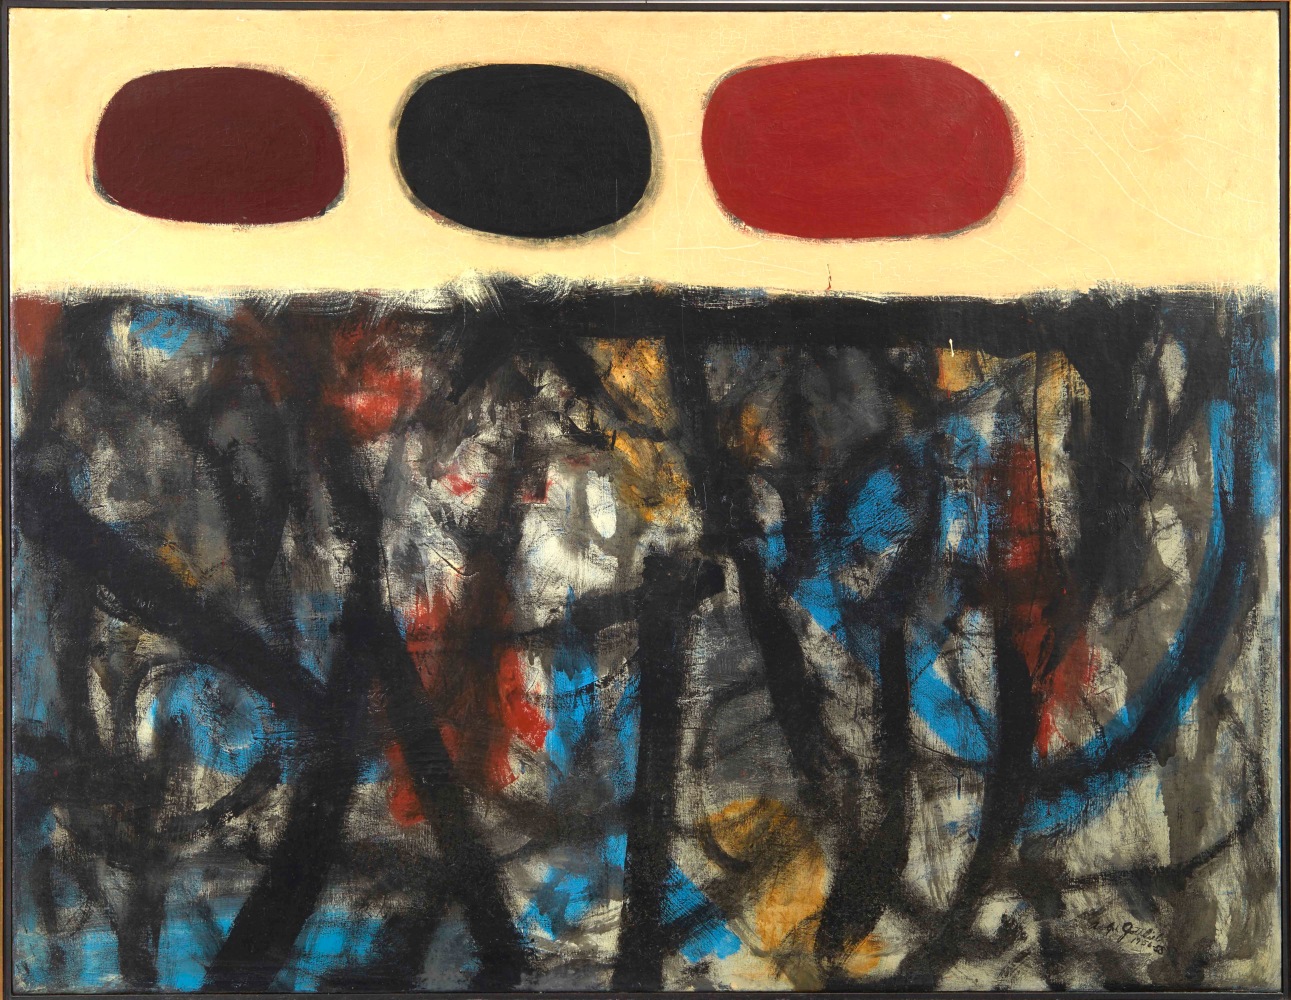 Adolph Gottlieb

Polychromed Maze

1956-1958

oil on canvas

42 x 54 inches (107 x 137 cm)